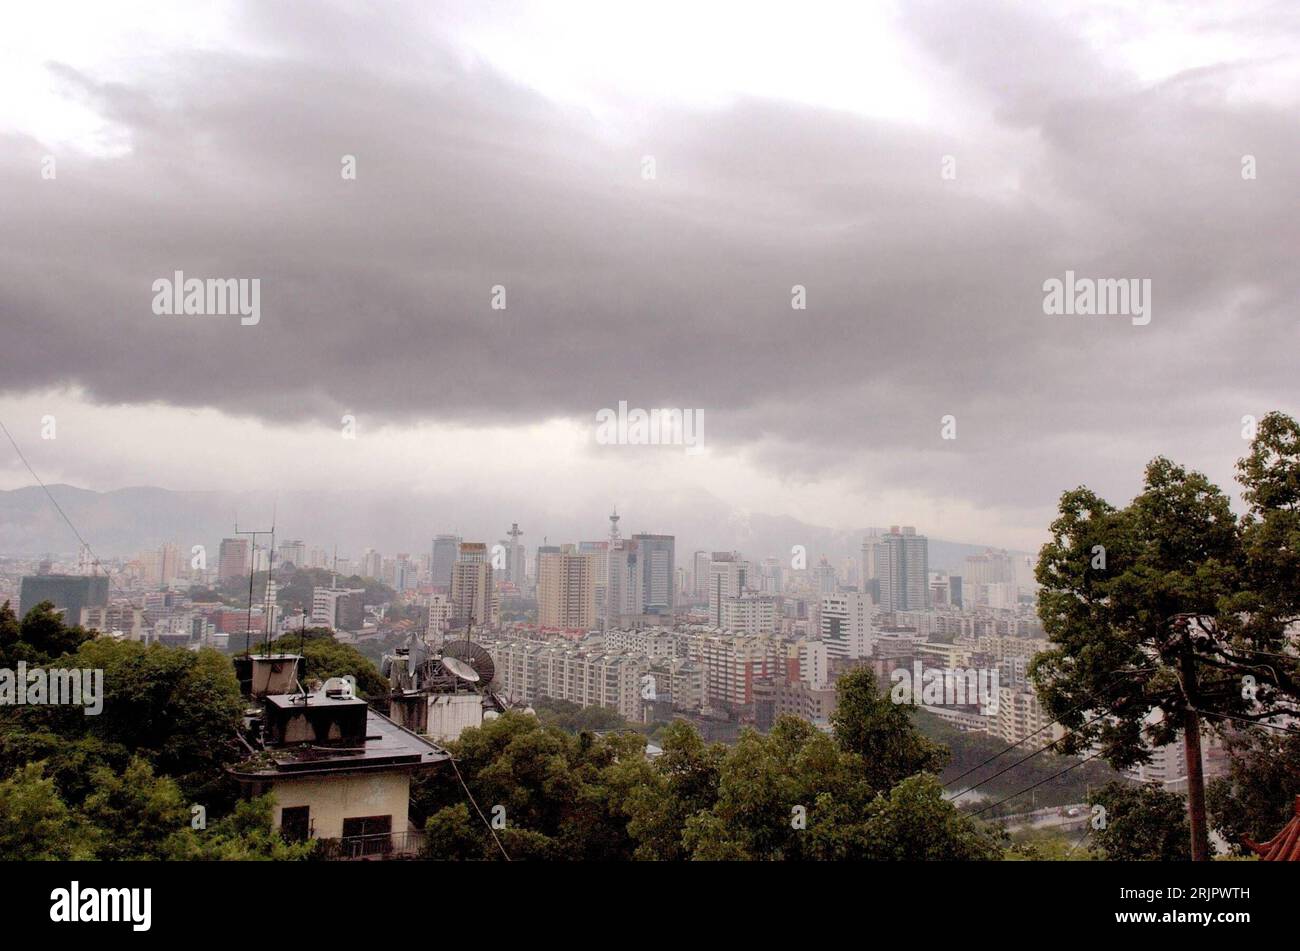 Bildnummer: 51244735  Datum: 17.05.2006  Copyright: imago/Xinhua Dunkle Regenwolken über Fuzhou künden vom Taifun Chanchu PUBLICATIONxNOTxINxCHN, Landschaft; 2006, Fuzhou, Fujian, Regen, regnen, regnet, Sturm, Stürme, Wetter, Wirbelsturm, Wirbelstürme, Wetterkapriole, Wetterkapriolen, Unwetter, Regenfall, Regenfälle, Wolken, Regenwolke; , quer, Kbdig, Totale, Stadtlandschaft, China,  , Wetter Stock Photo